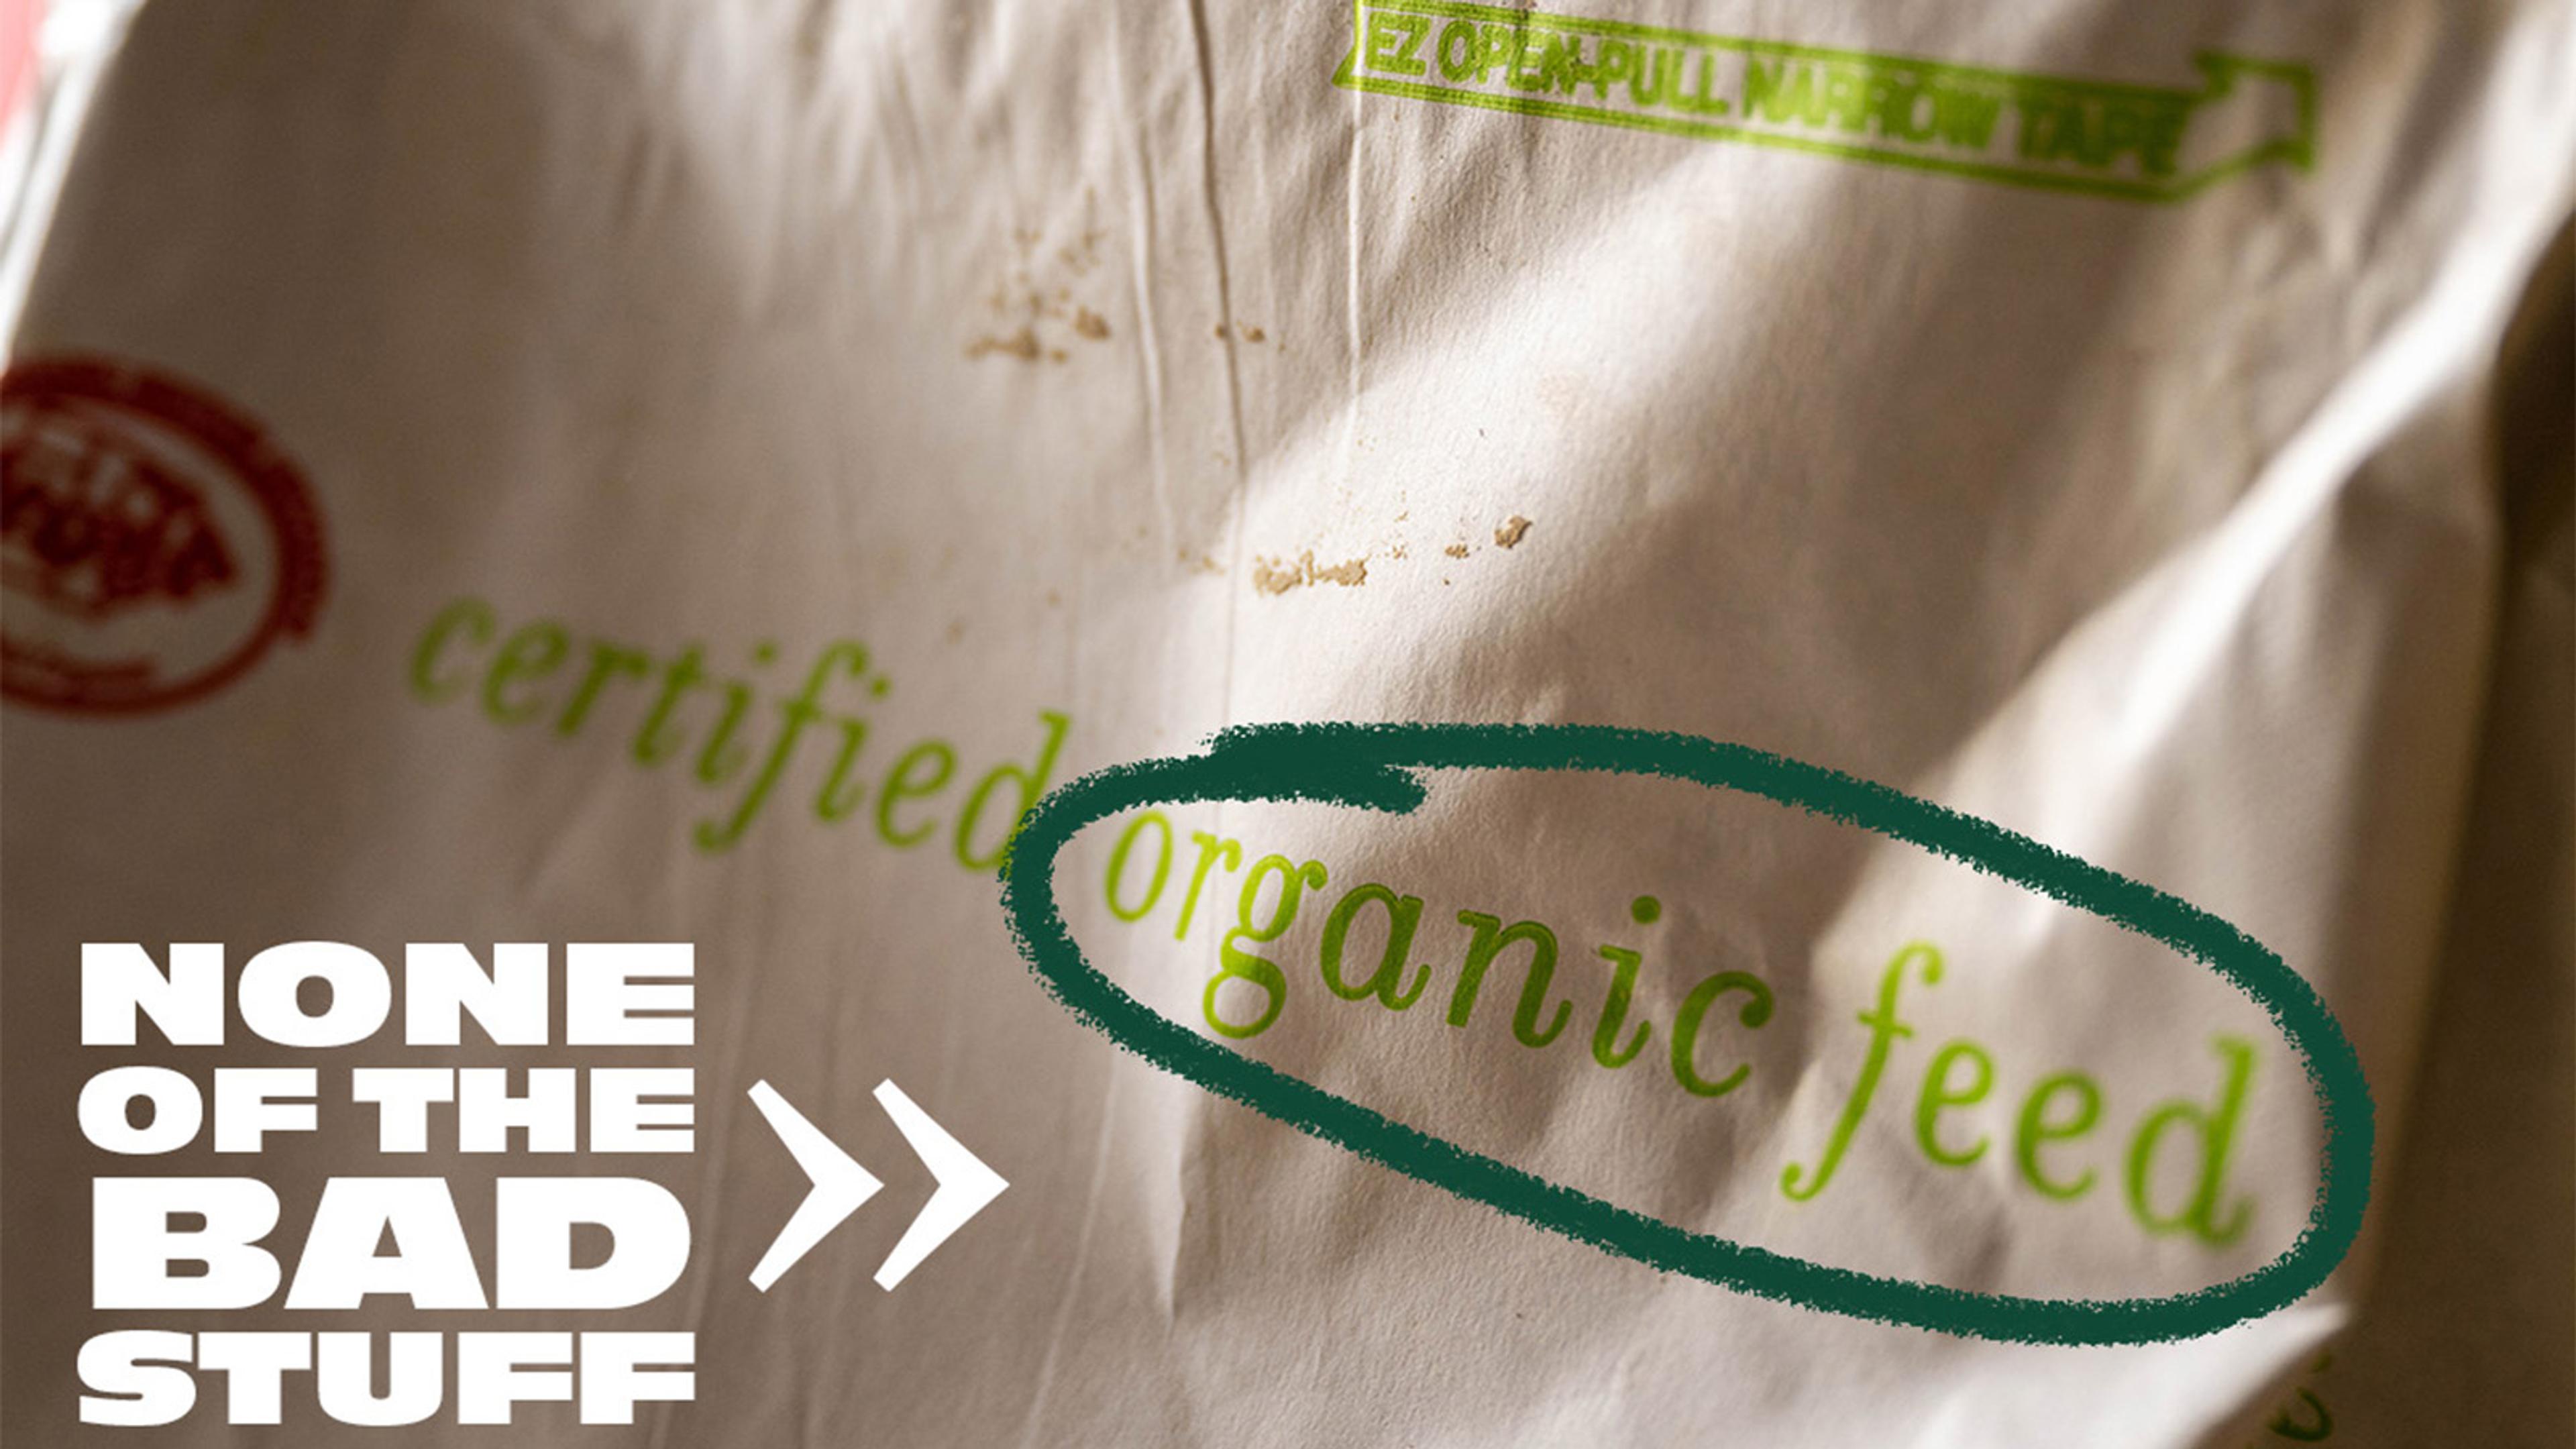 A bag of certified organic animal feed.